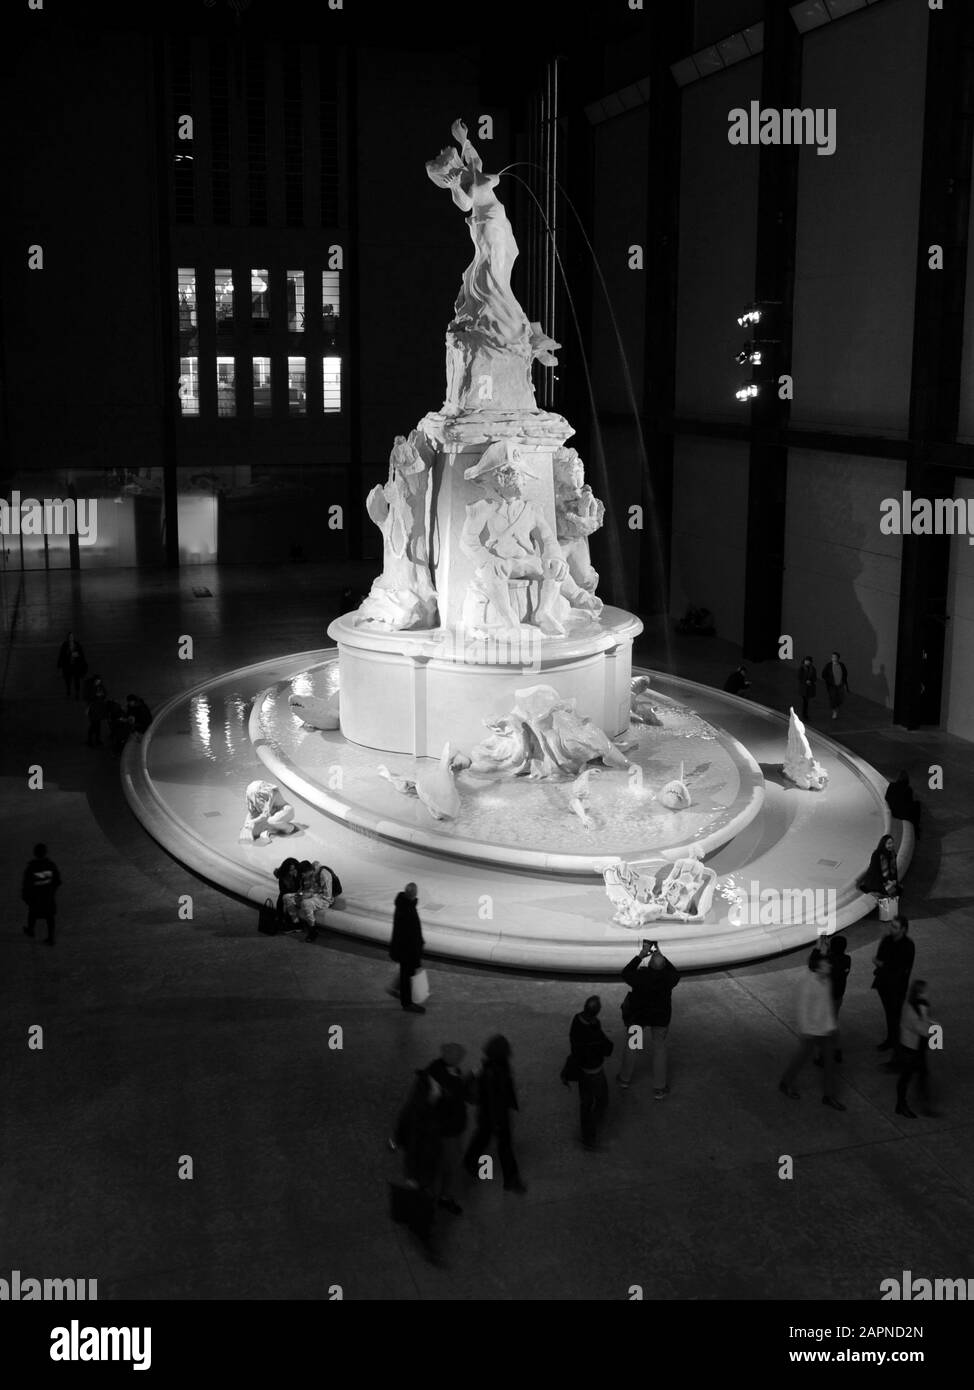 'Fons Americanus' fountain by Kara Walker in Tate Modern Museum, Southwark, London, UK. Stock Photo